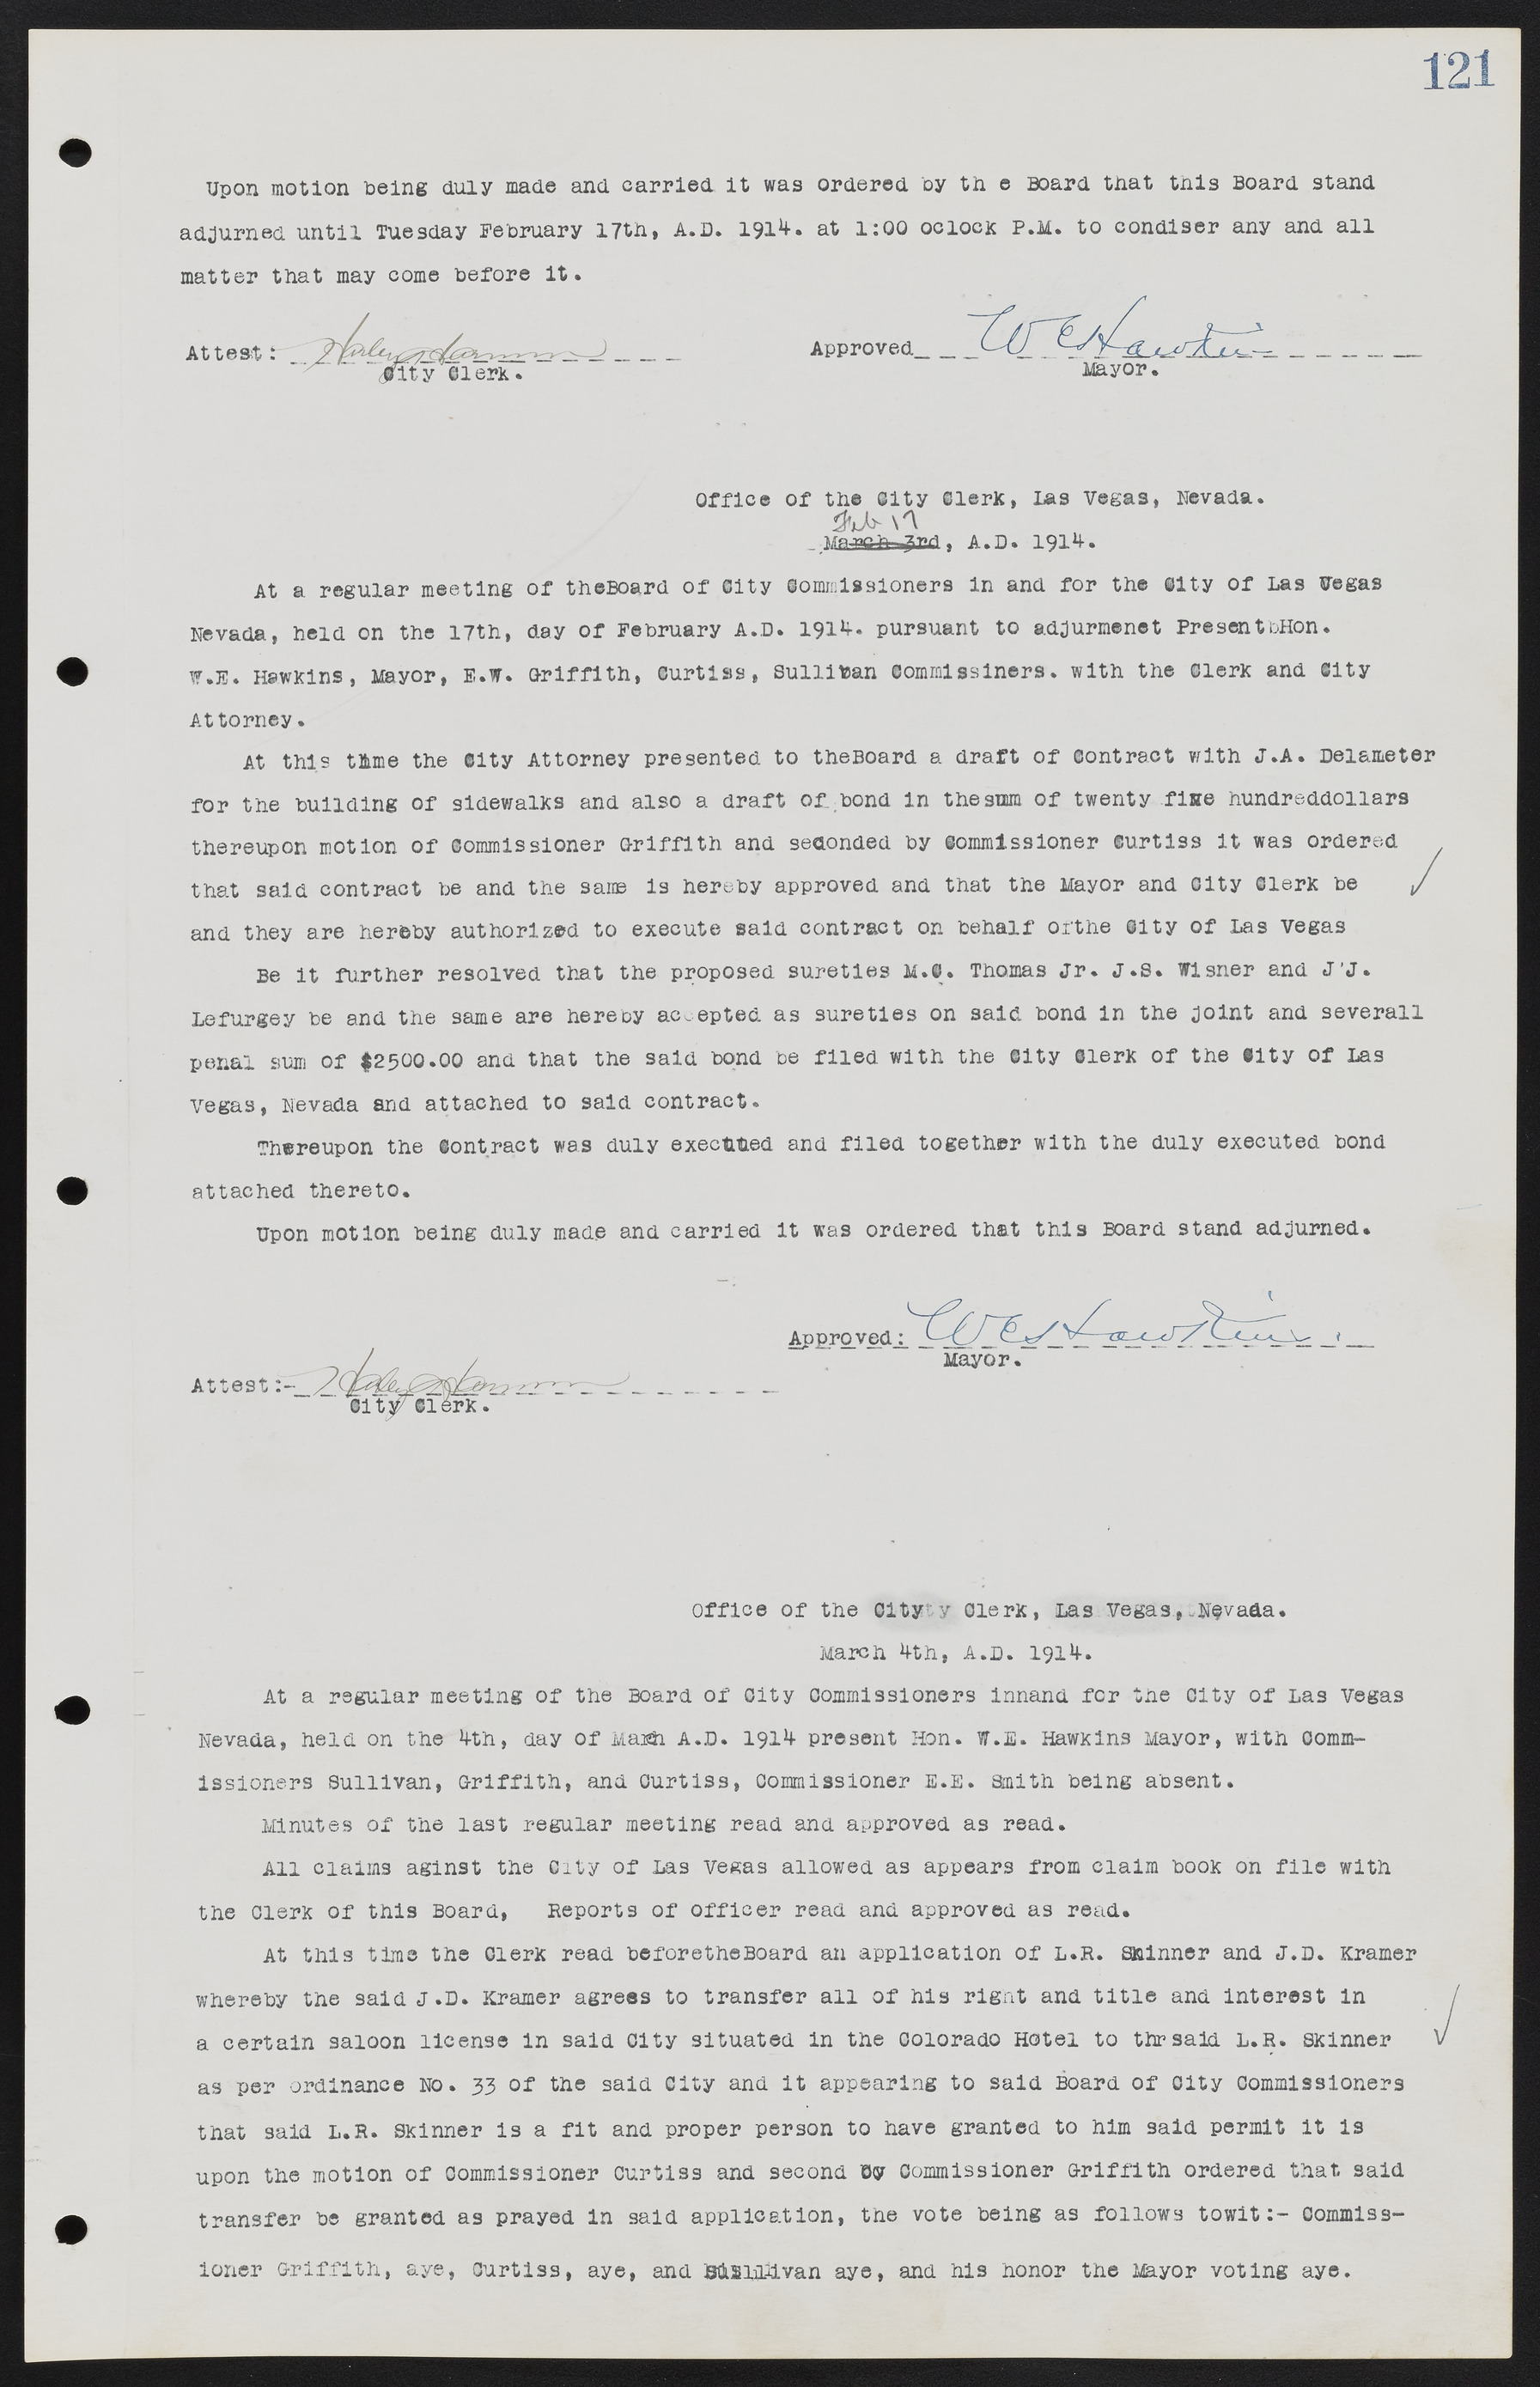 Las Vegas City Commission Minutes, June 22, 1911 to February 7, 1922, lvc000001-135